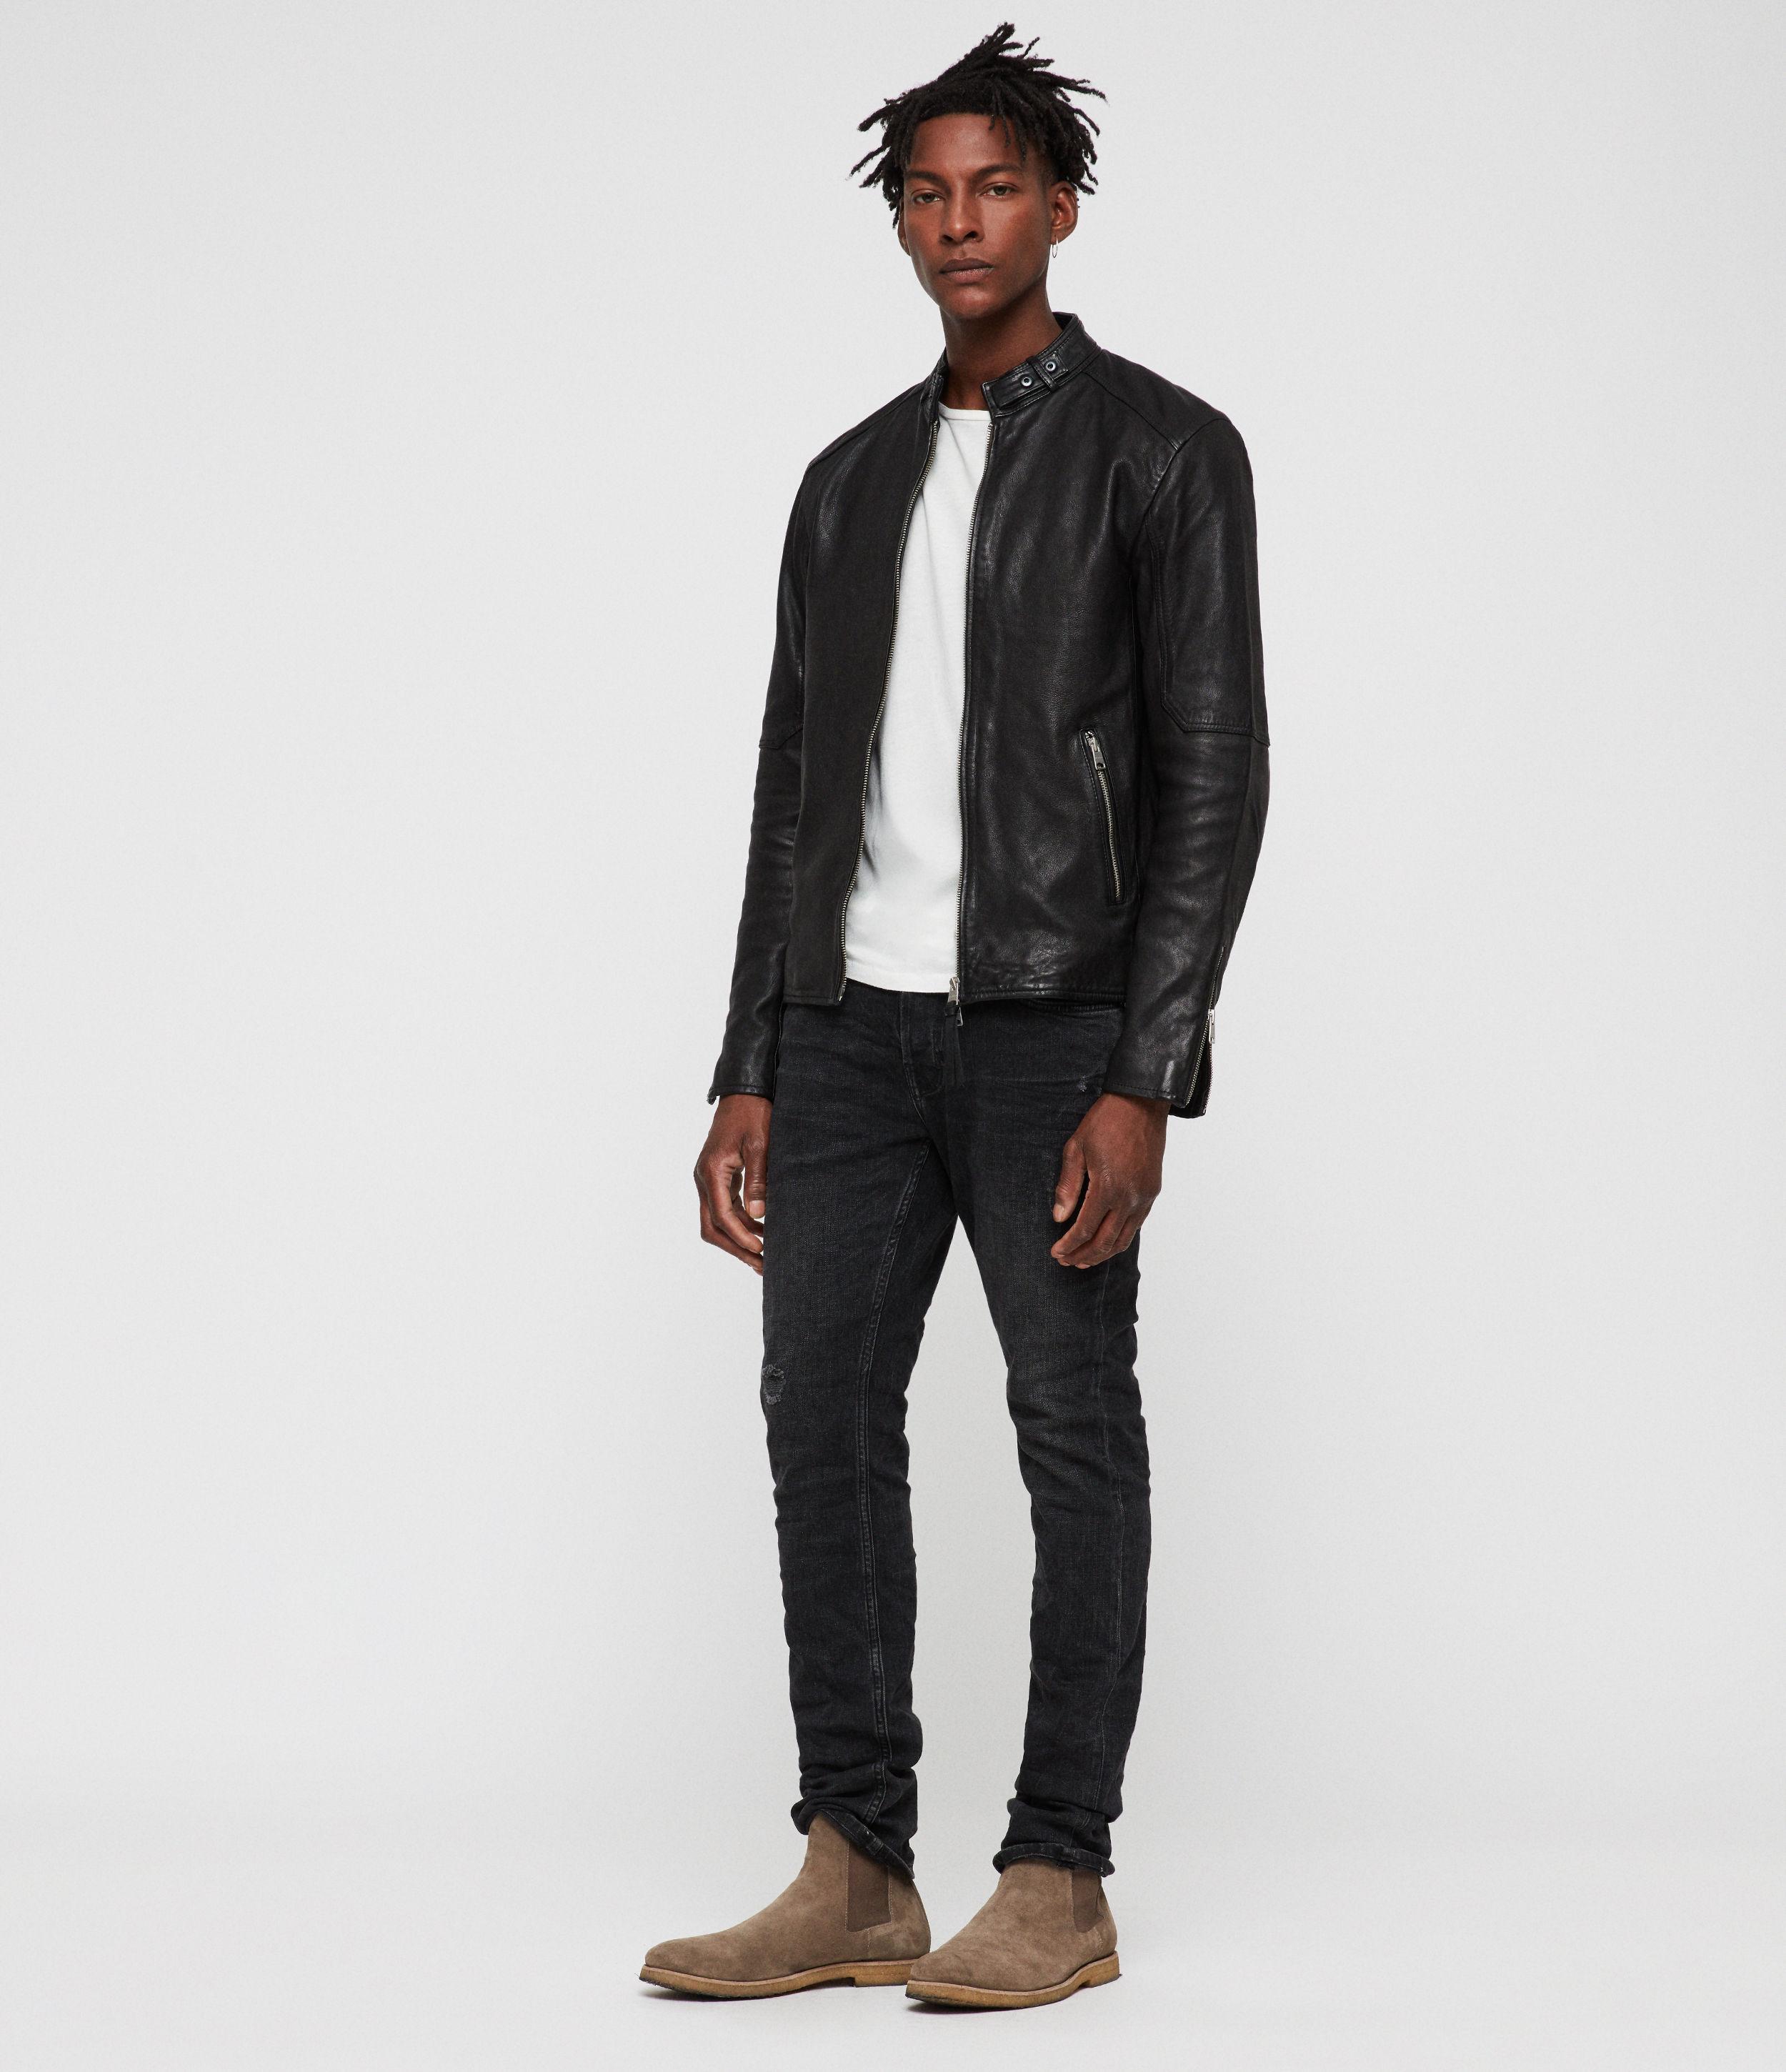 Lyst - AllSaints Cora Leather Jacket in Black for Men